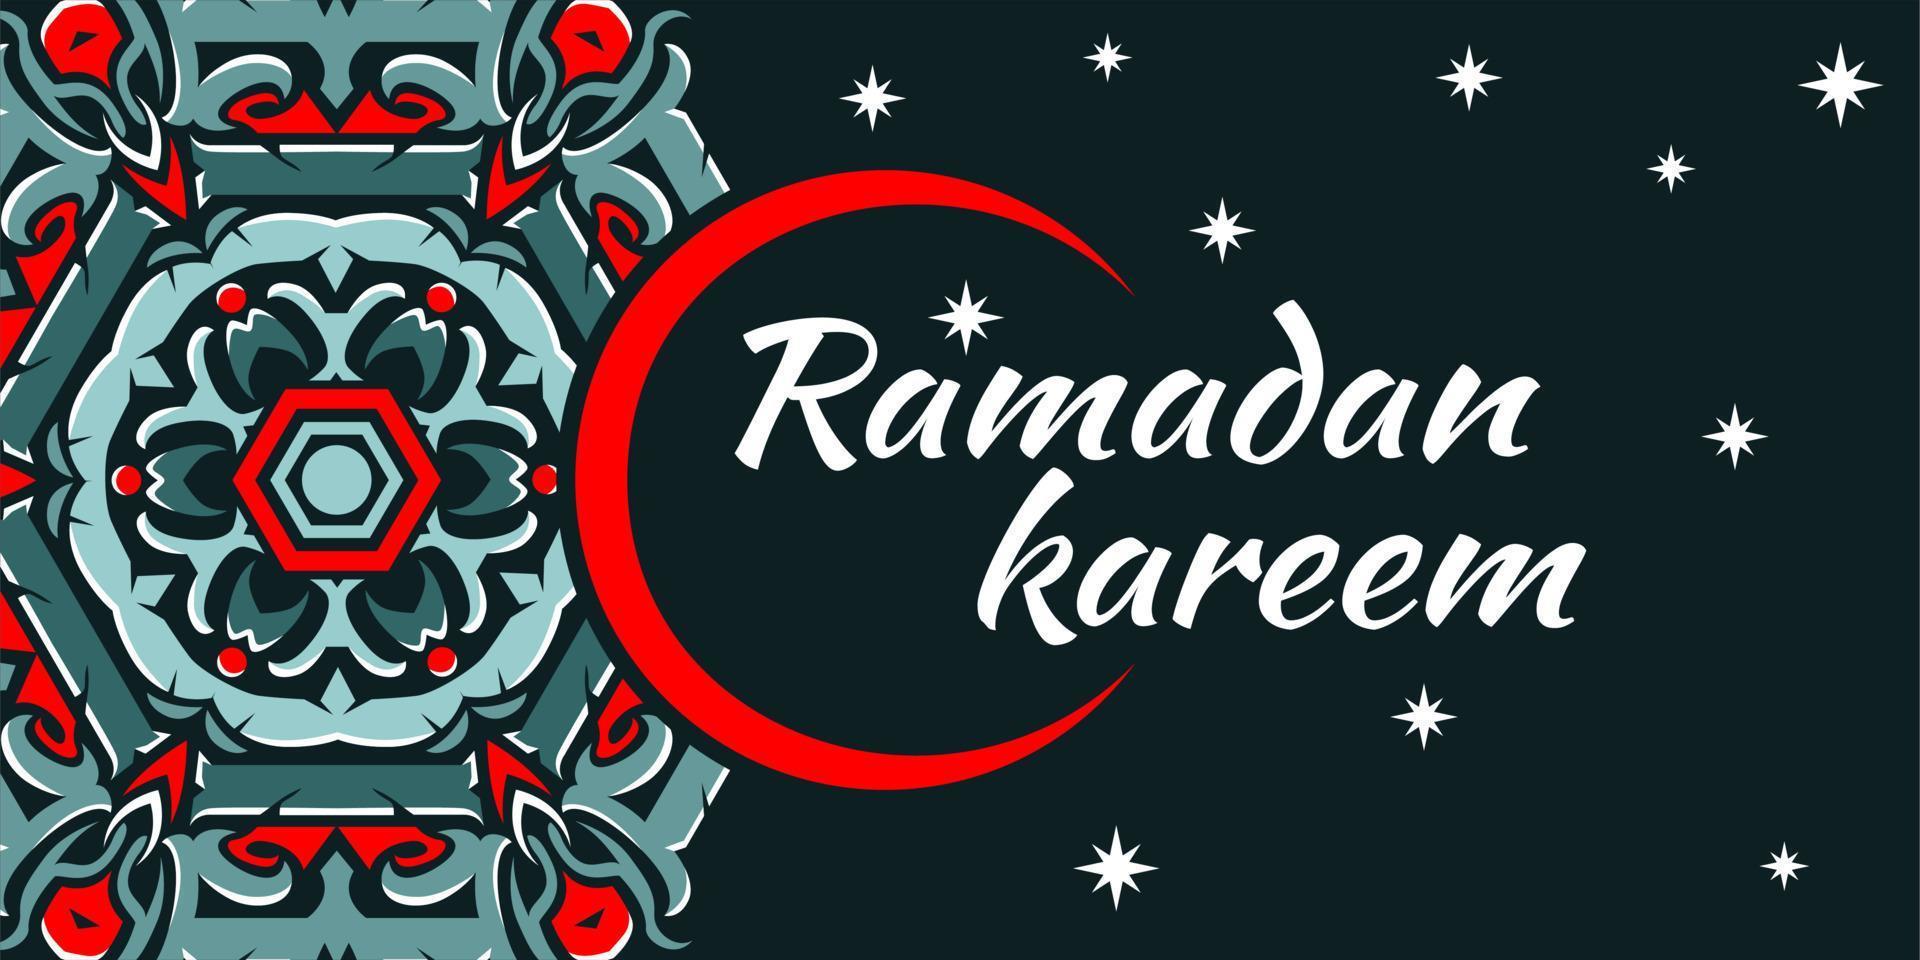 Ramadan Kareem background Free Vector